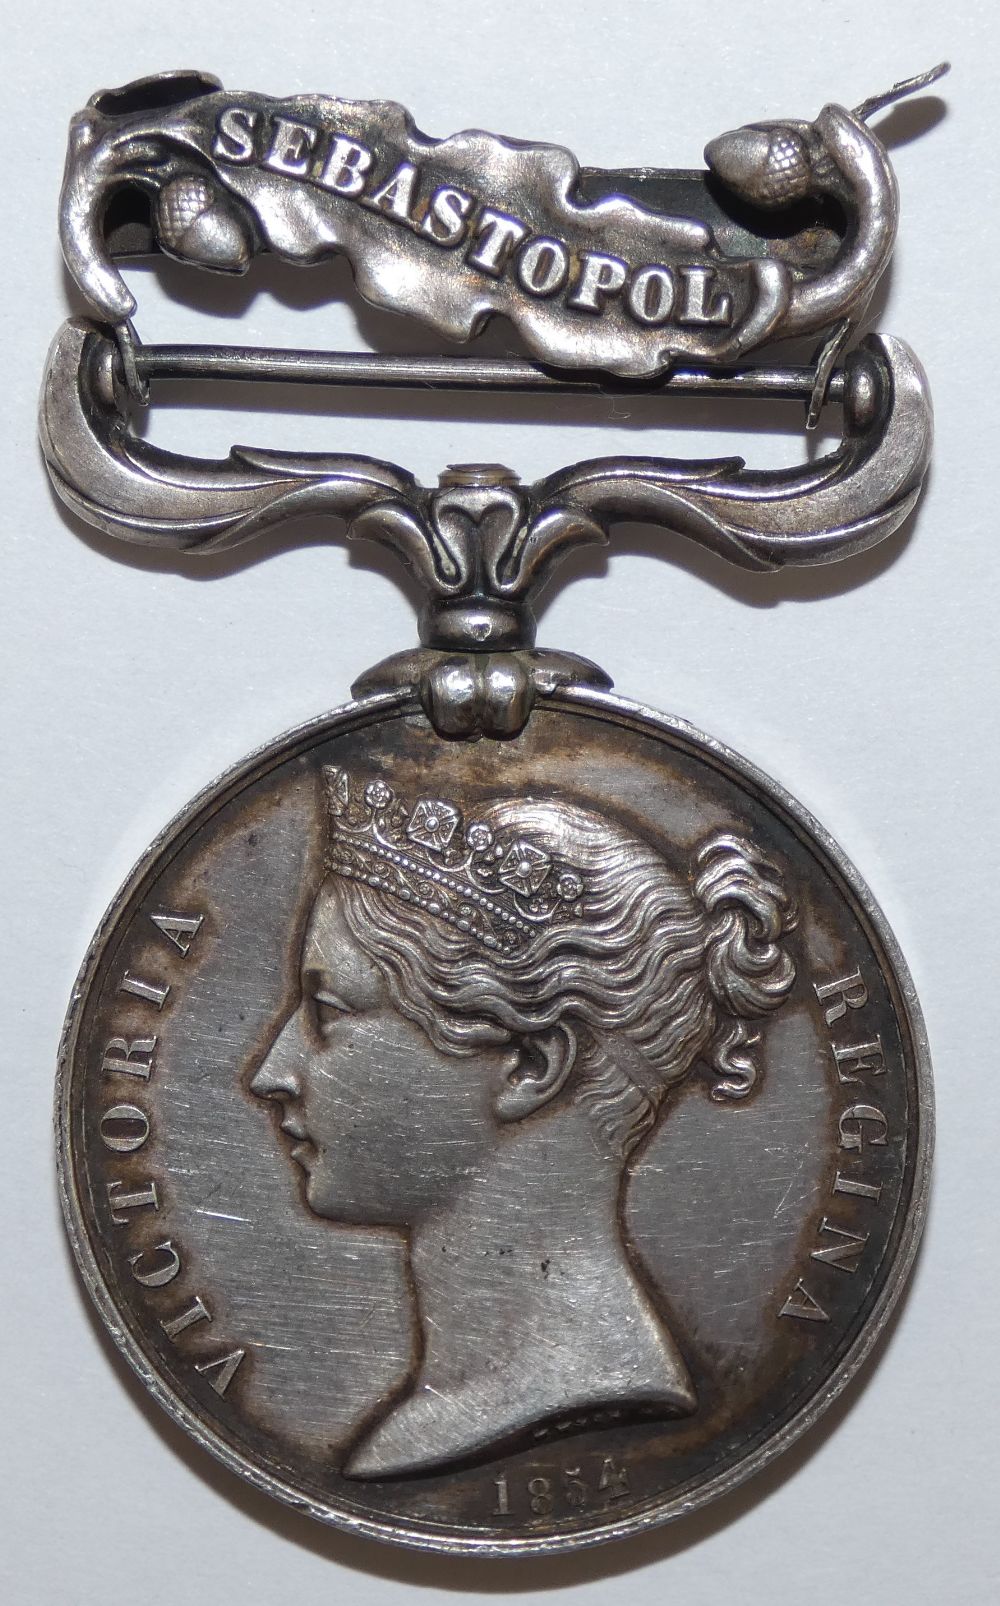 The Crimea Medal and bar Sebastopol (25th October 1854), named to P. Downey 1st Battalion 1st